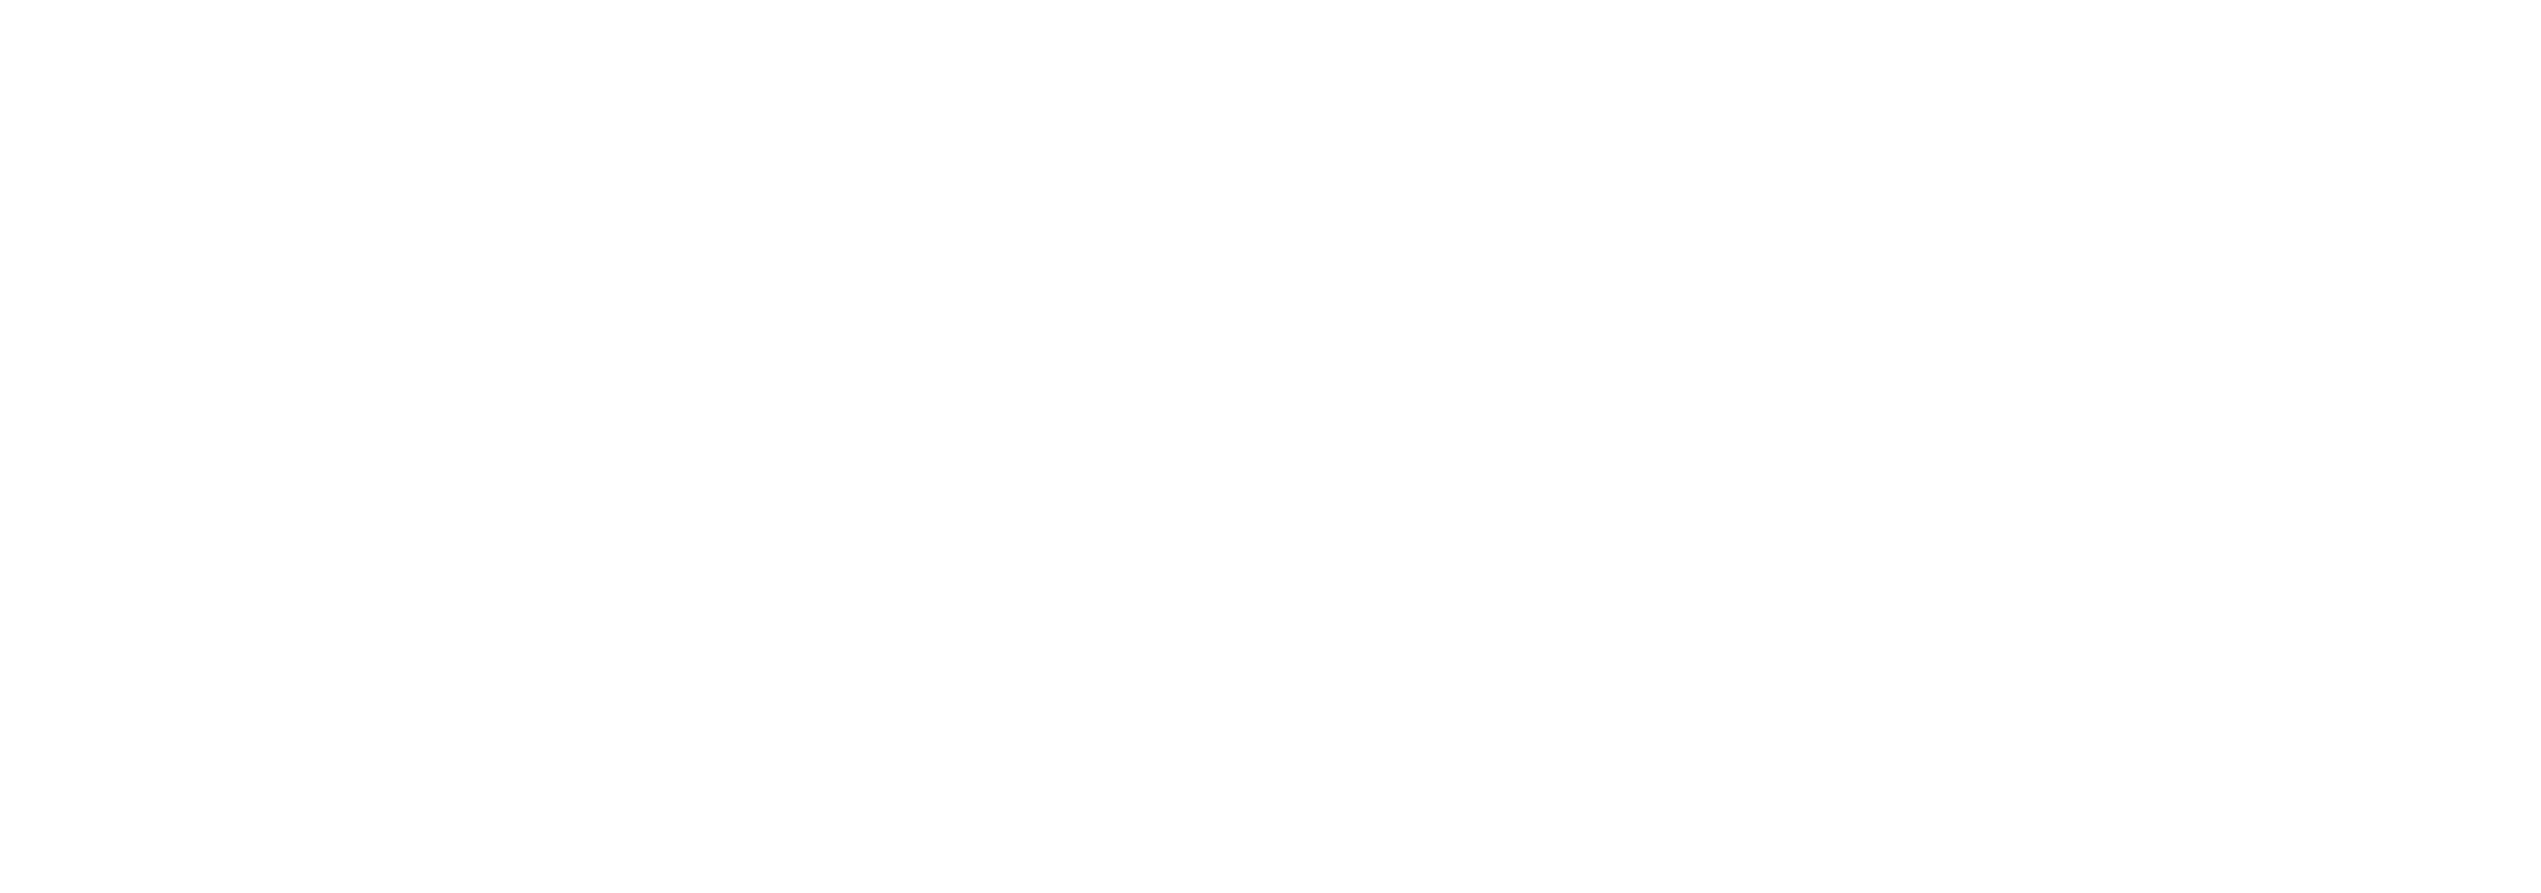 Logo Chiletec